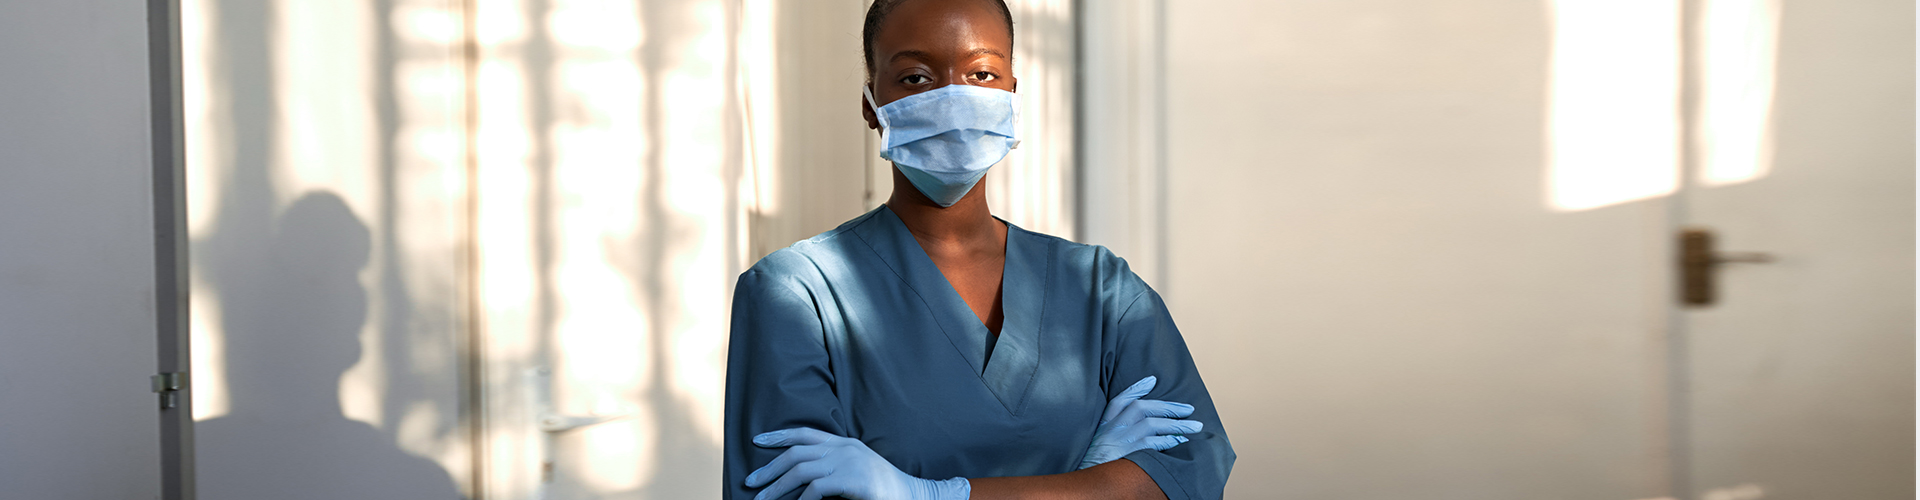 medical staff wearing face mask